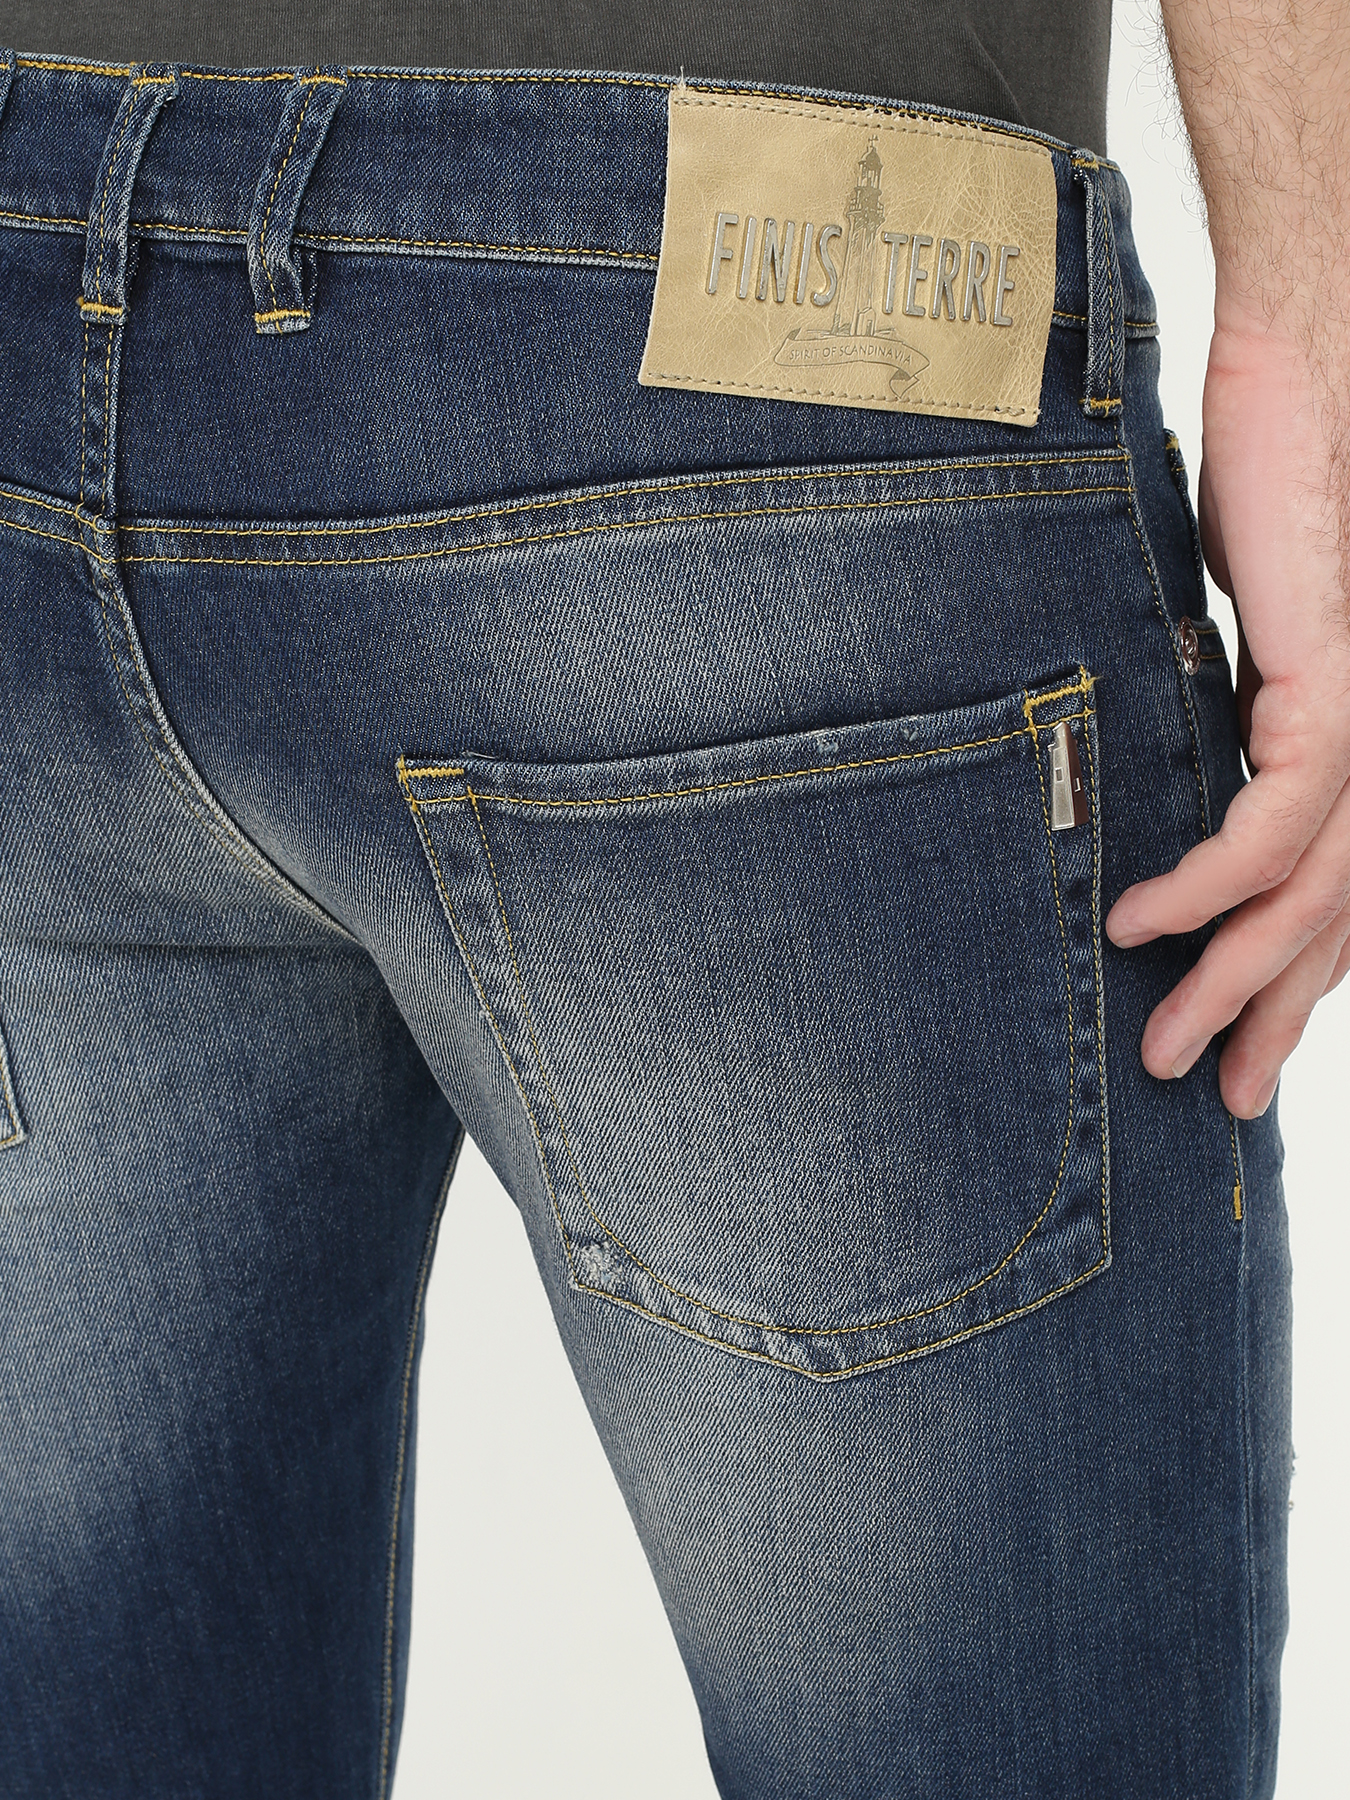 Finisterre Узкие мужские джинсы 322283-014 Фото 4